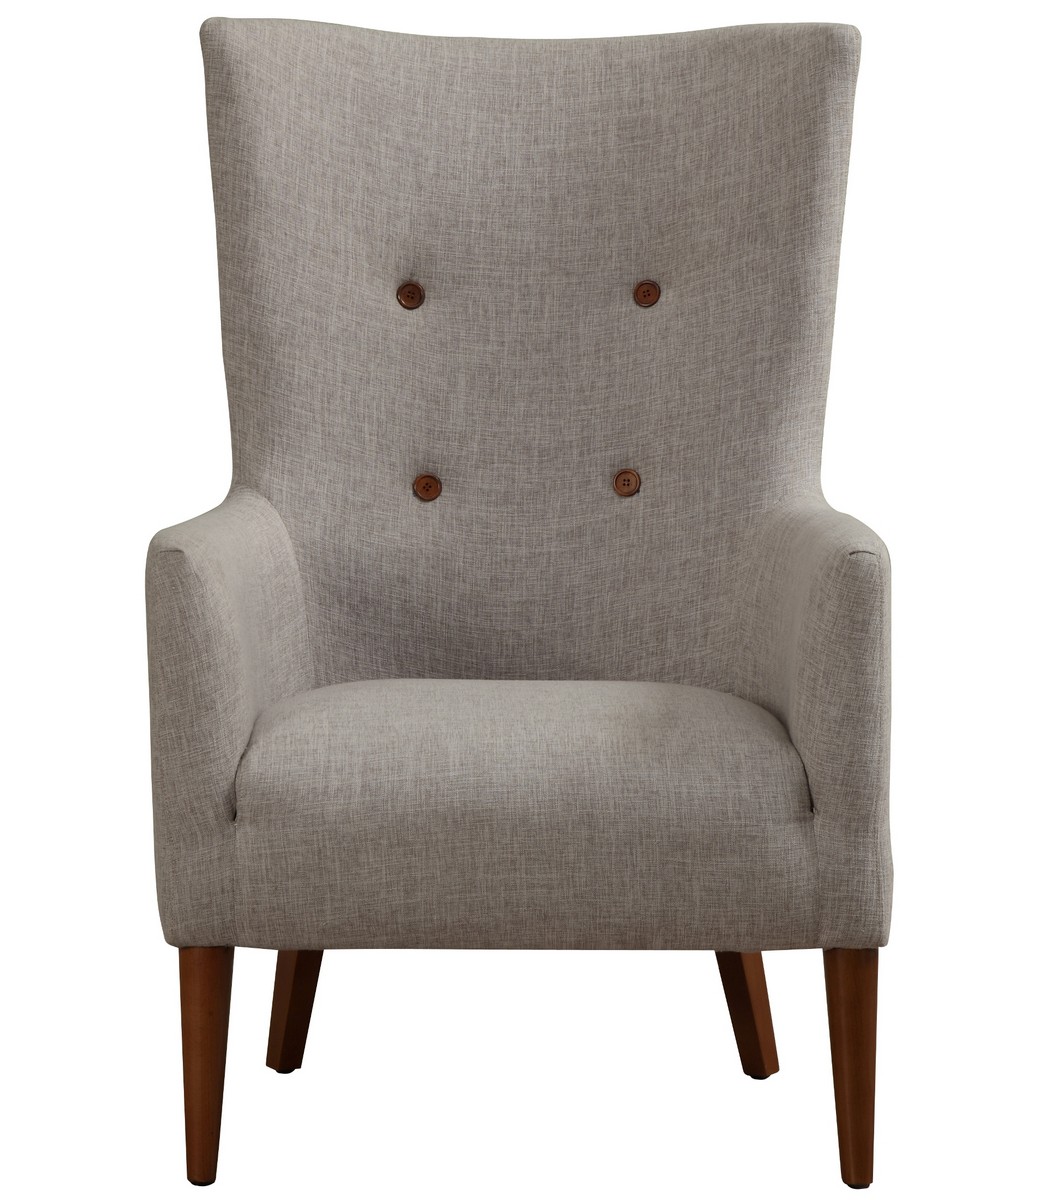 TOV Furniture Aspen Beige Linen Chair